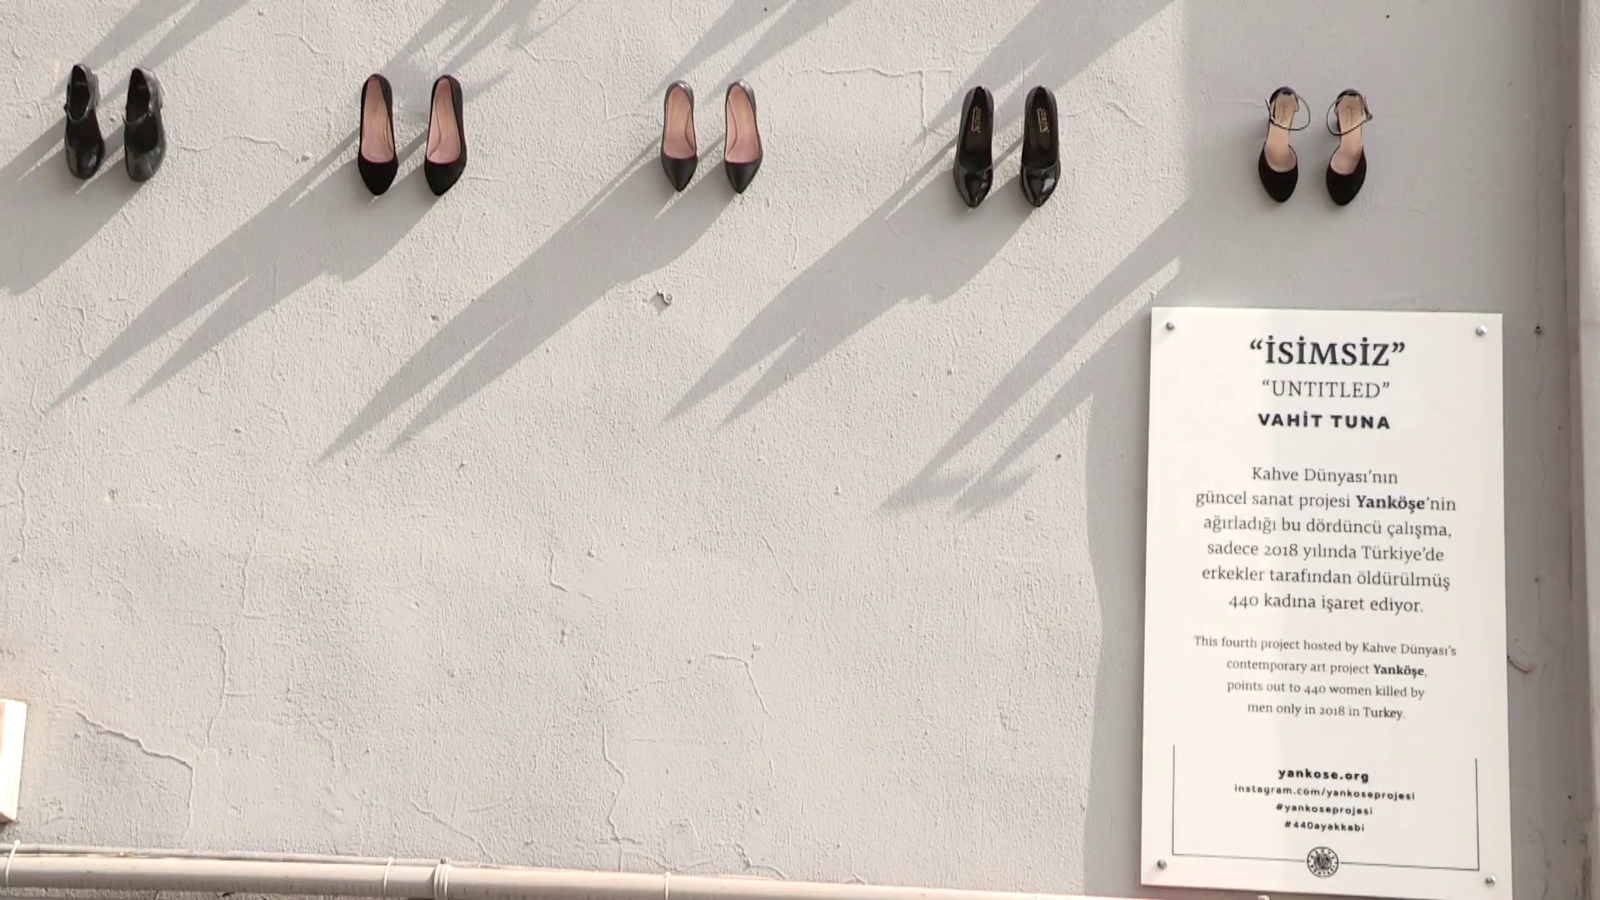 Ruptly-ศิลปินตุรกีจัดแสดงรองเท้าบนกำแพง ระลึกถึงผู้หญิงที่ถูกฆาตกรรม-วาฮิต ตูนา-Wahit Tuna